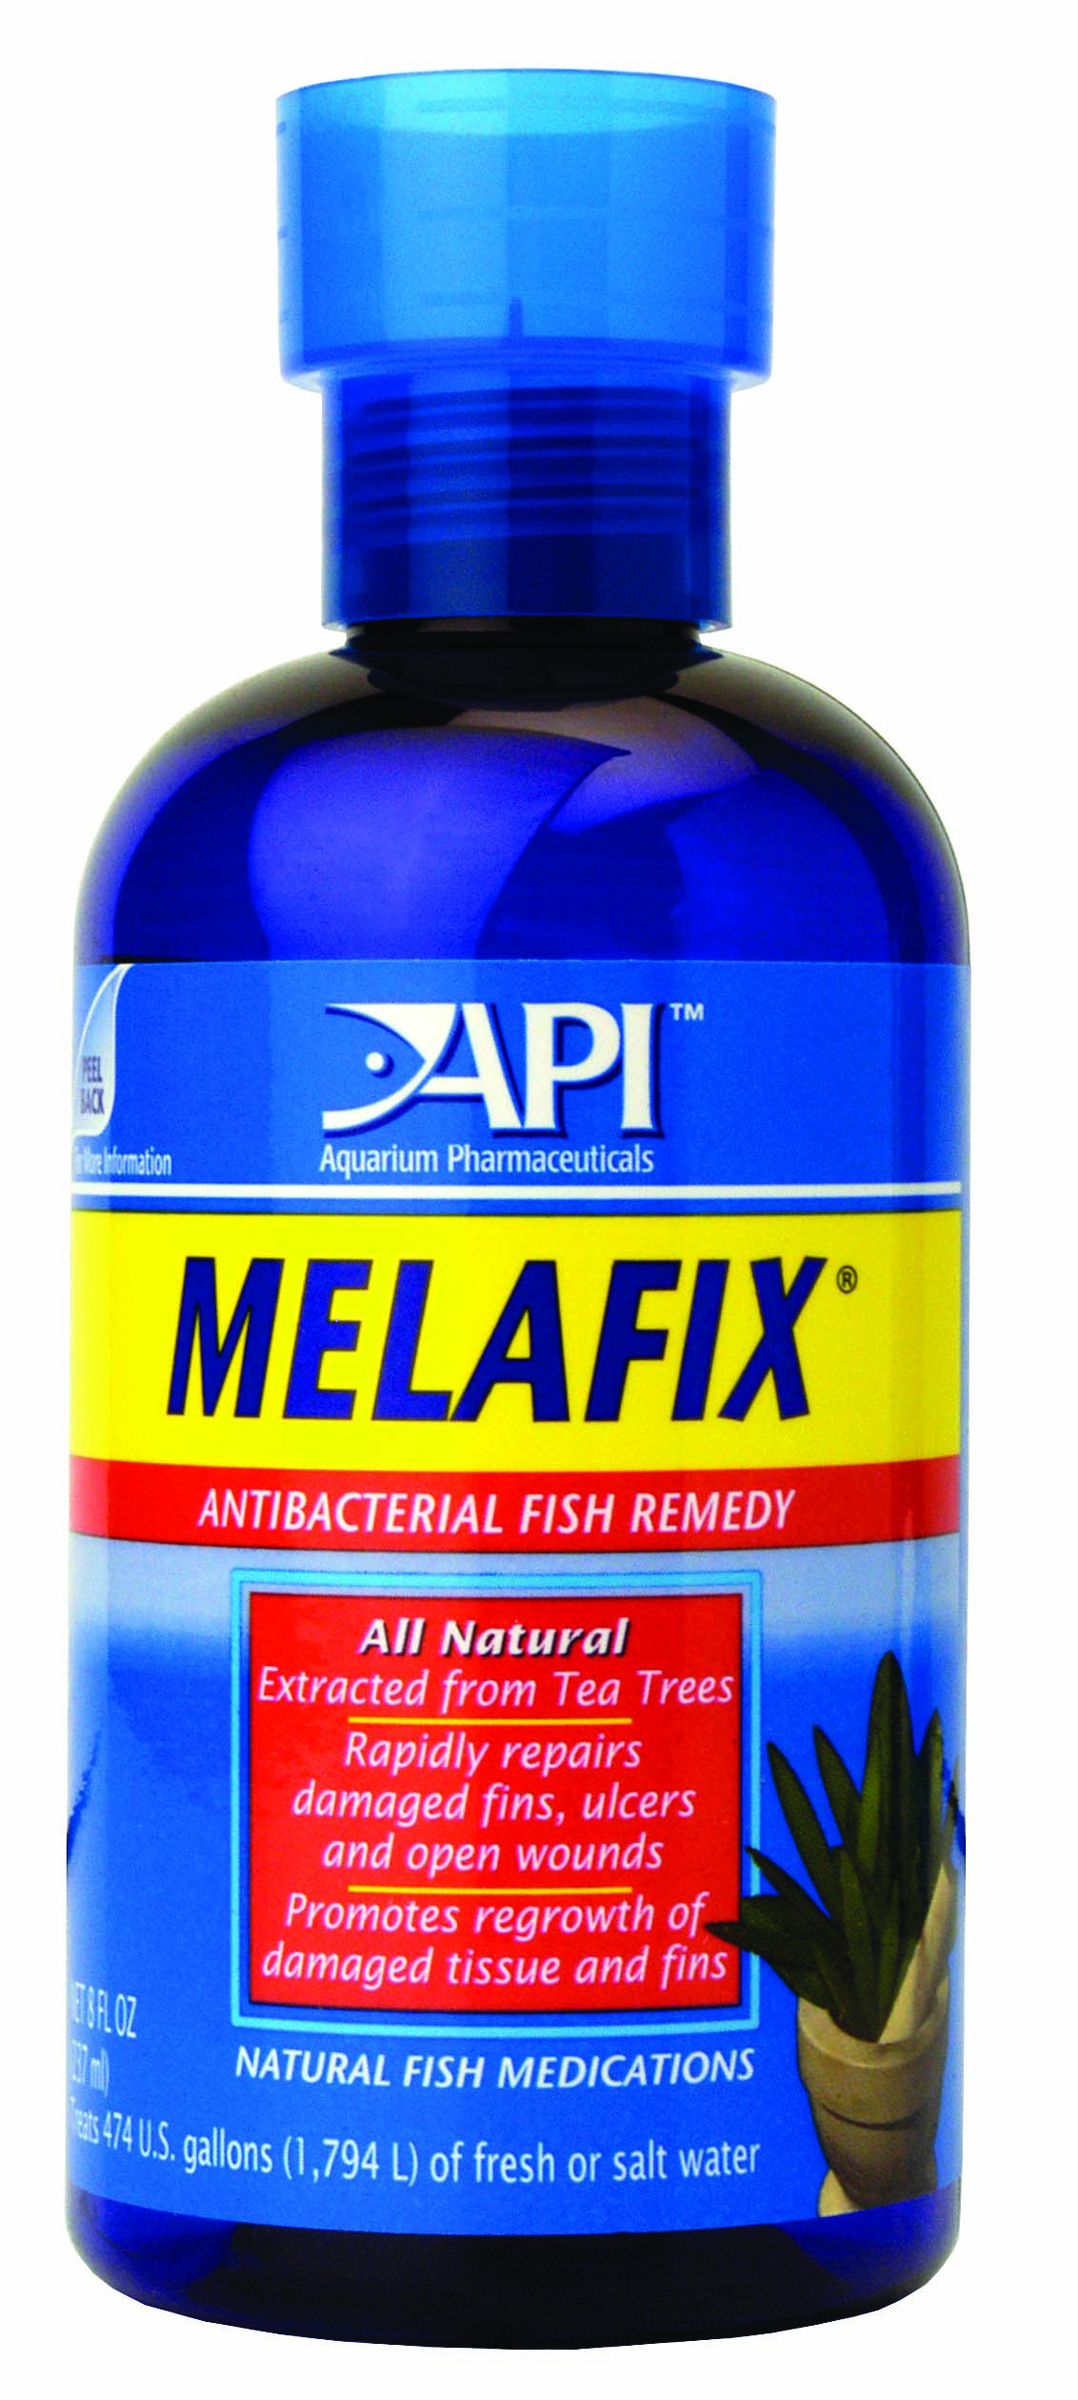 MELAFIX FISH REMEDY